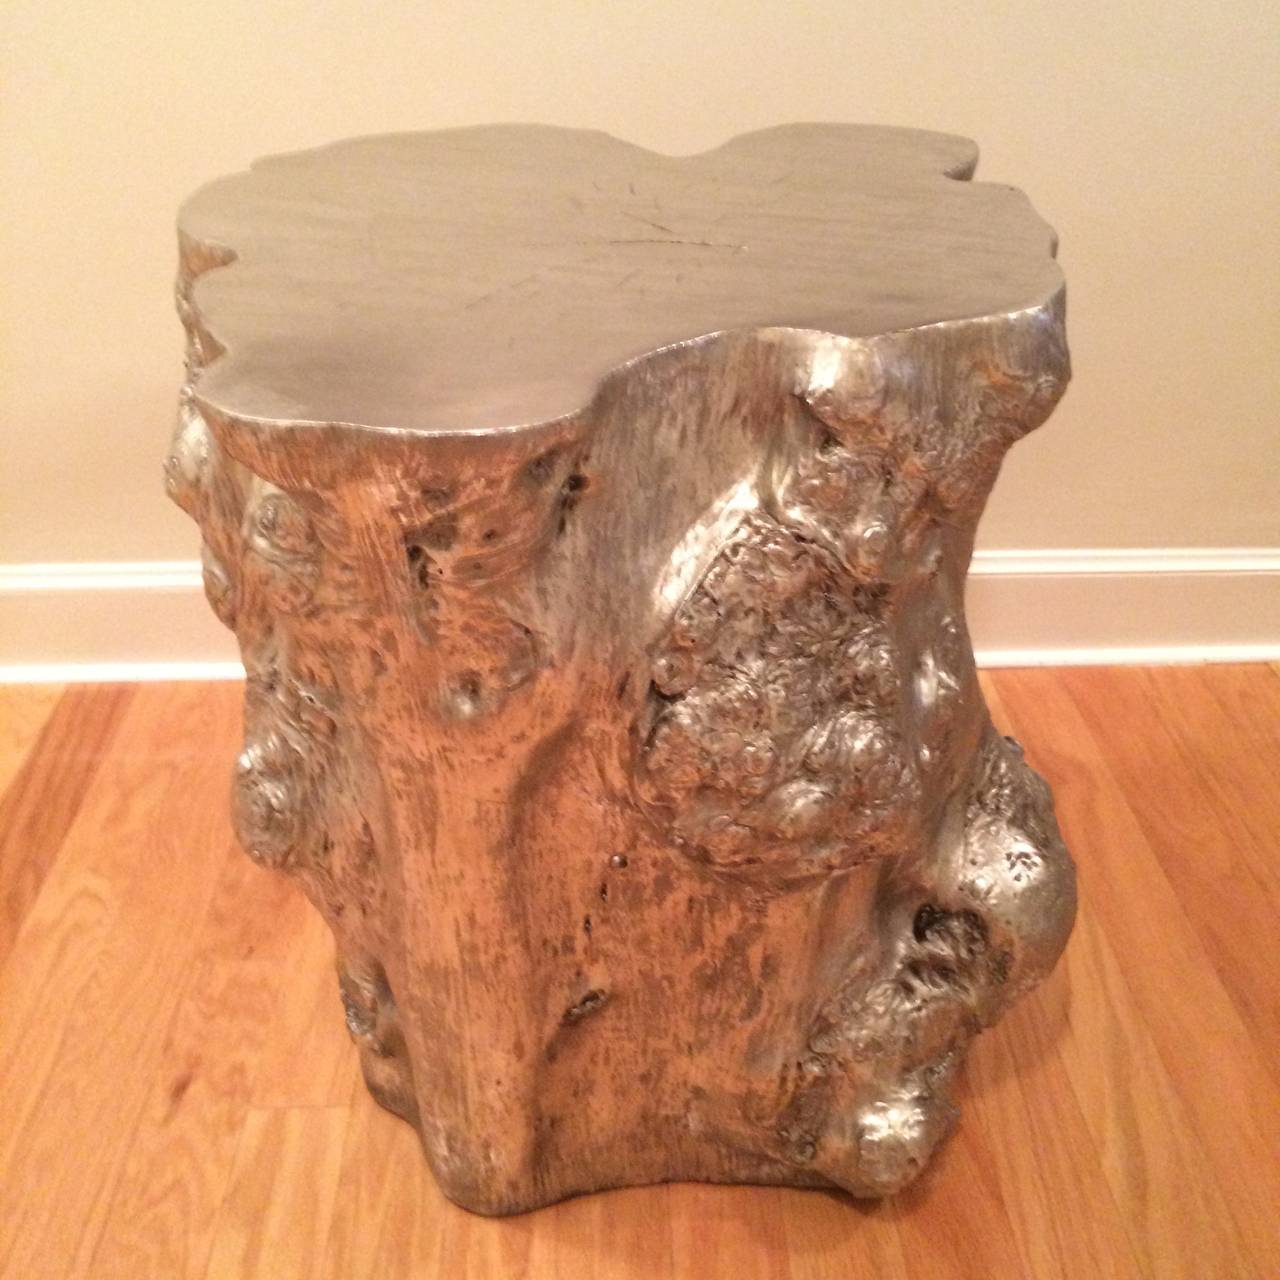 epoxy resin a tree stump